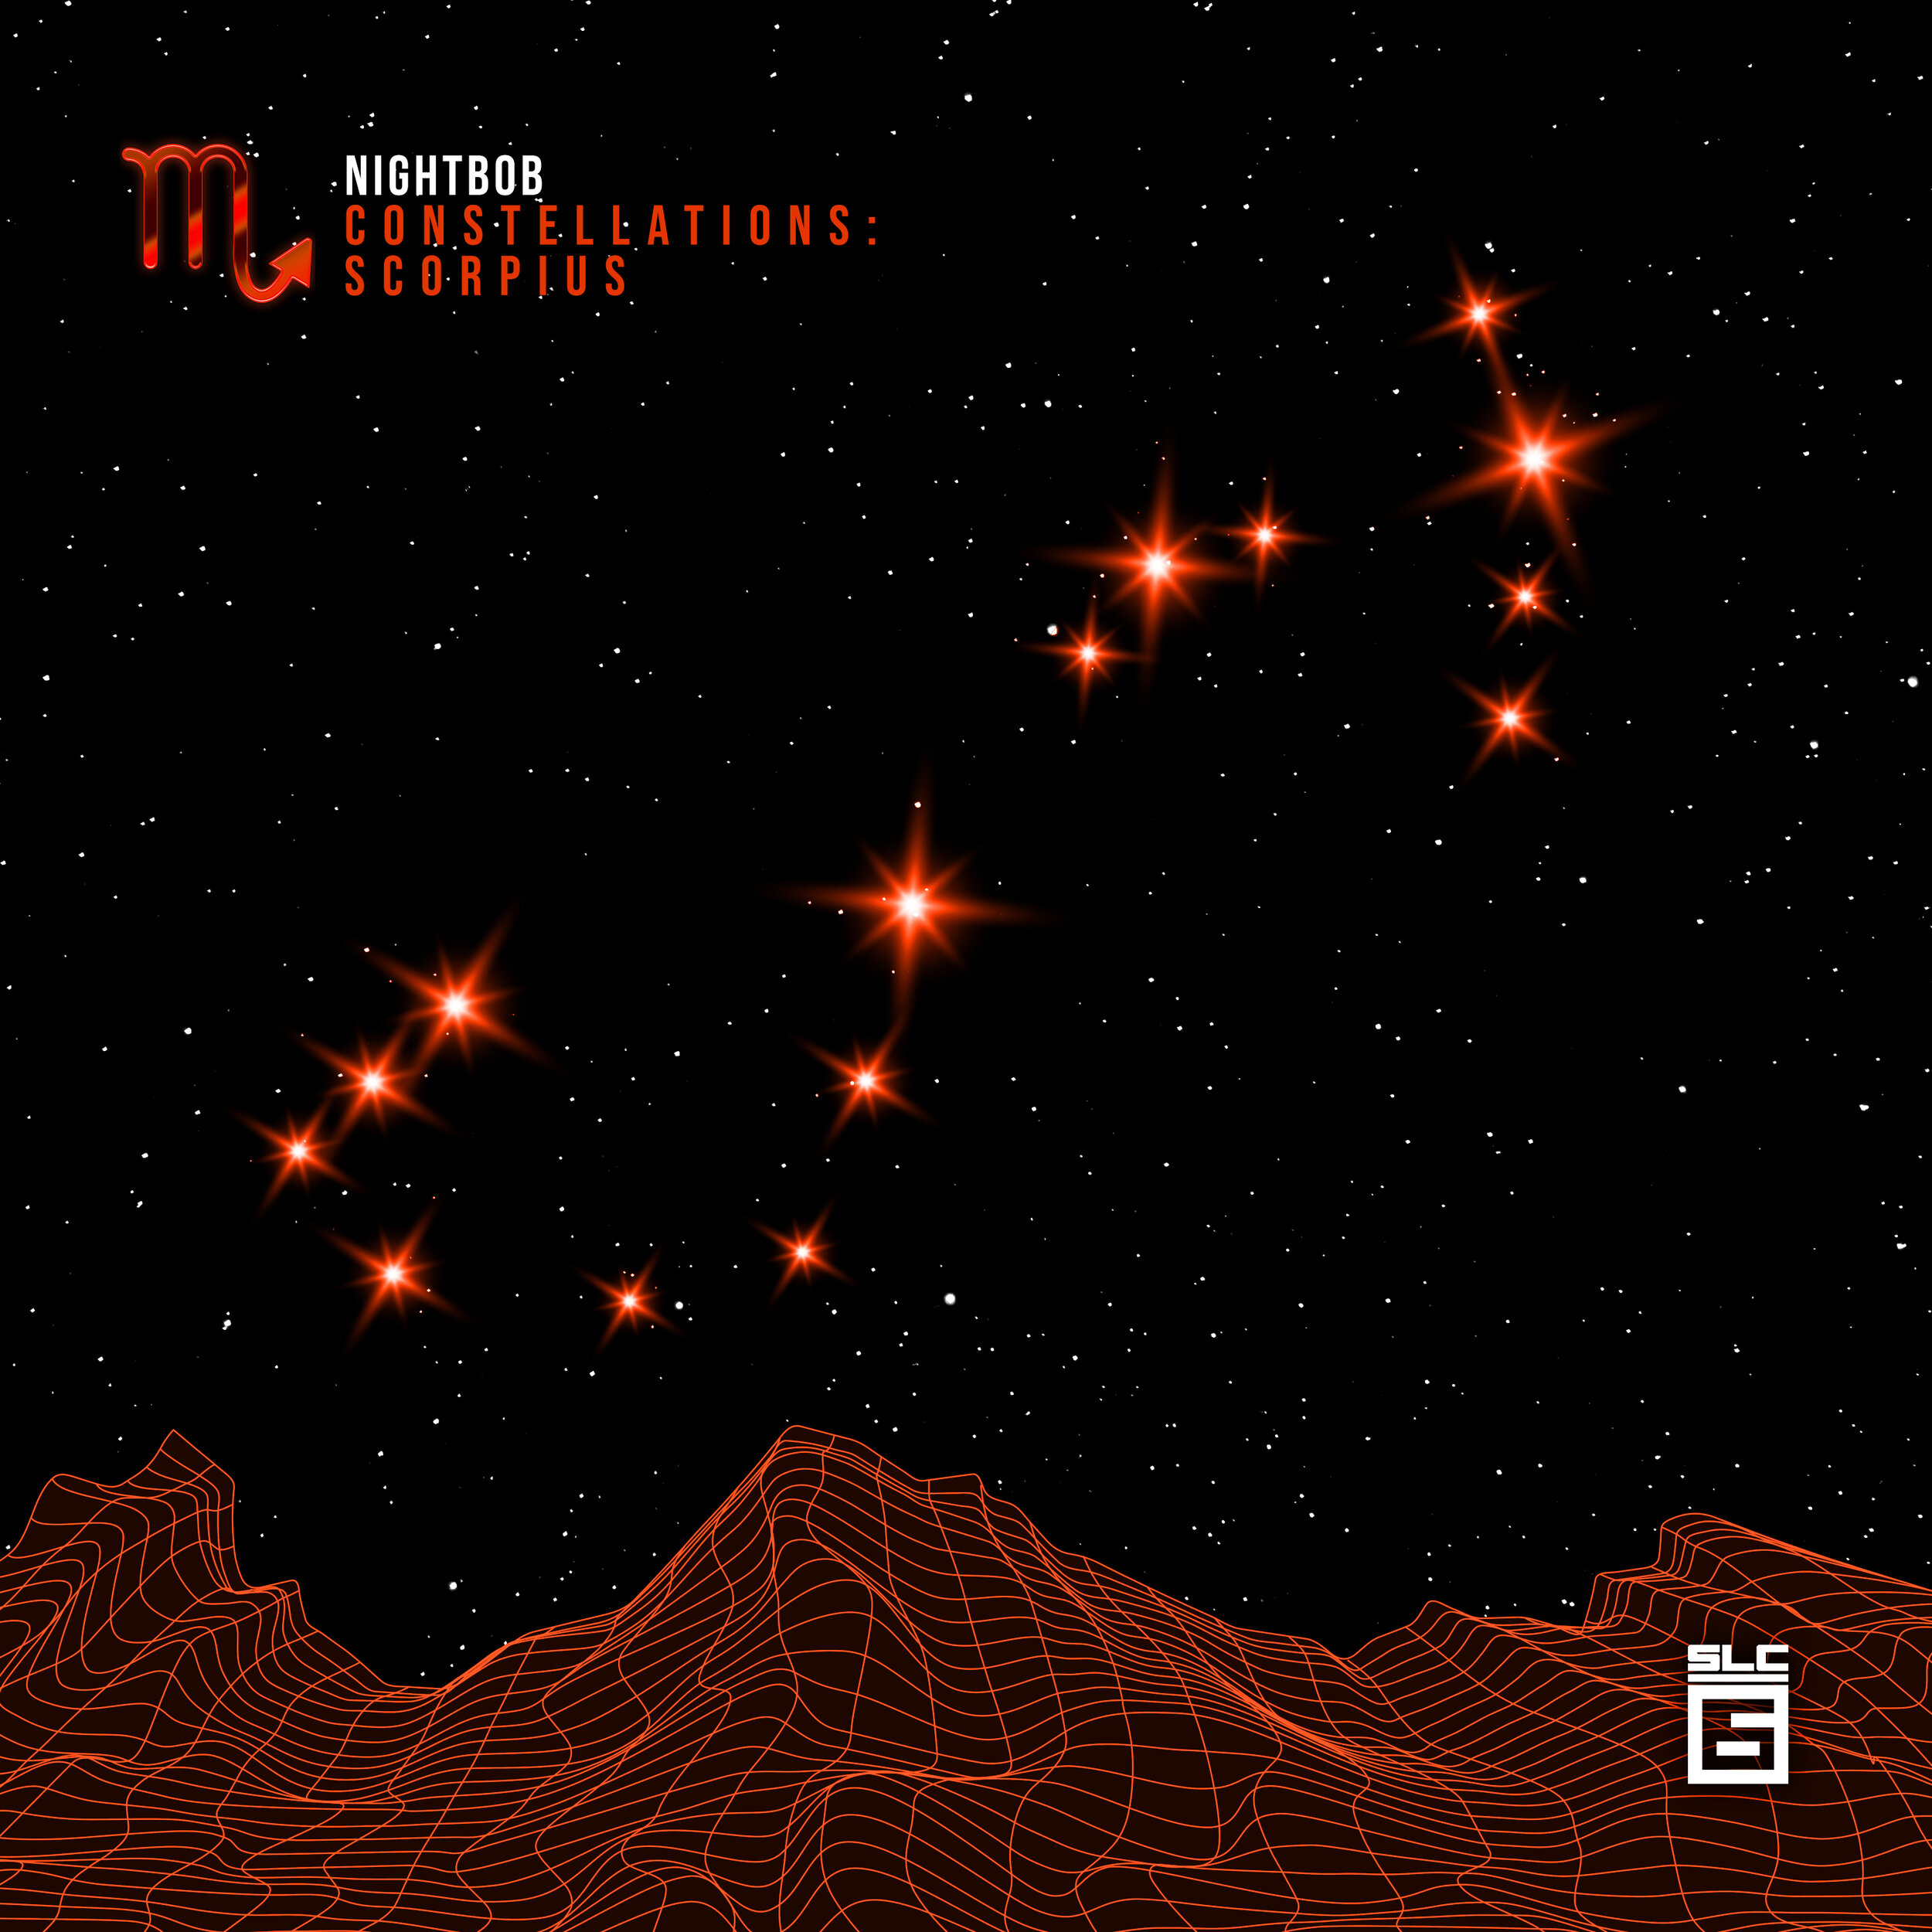 Constellations: Scorpius mixed by Nightbob